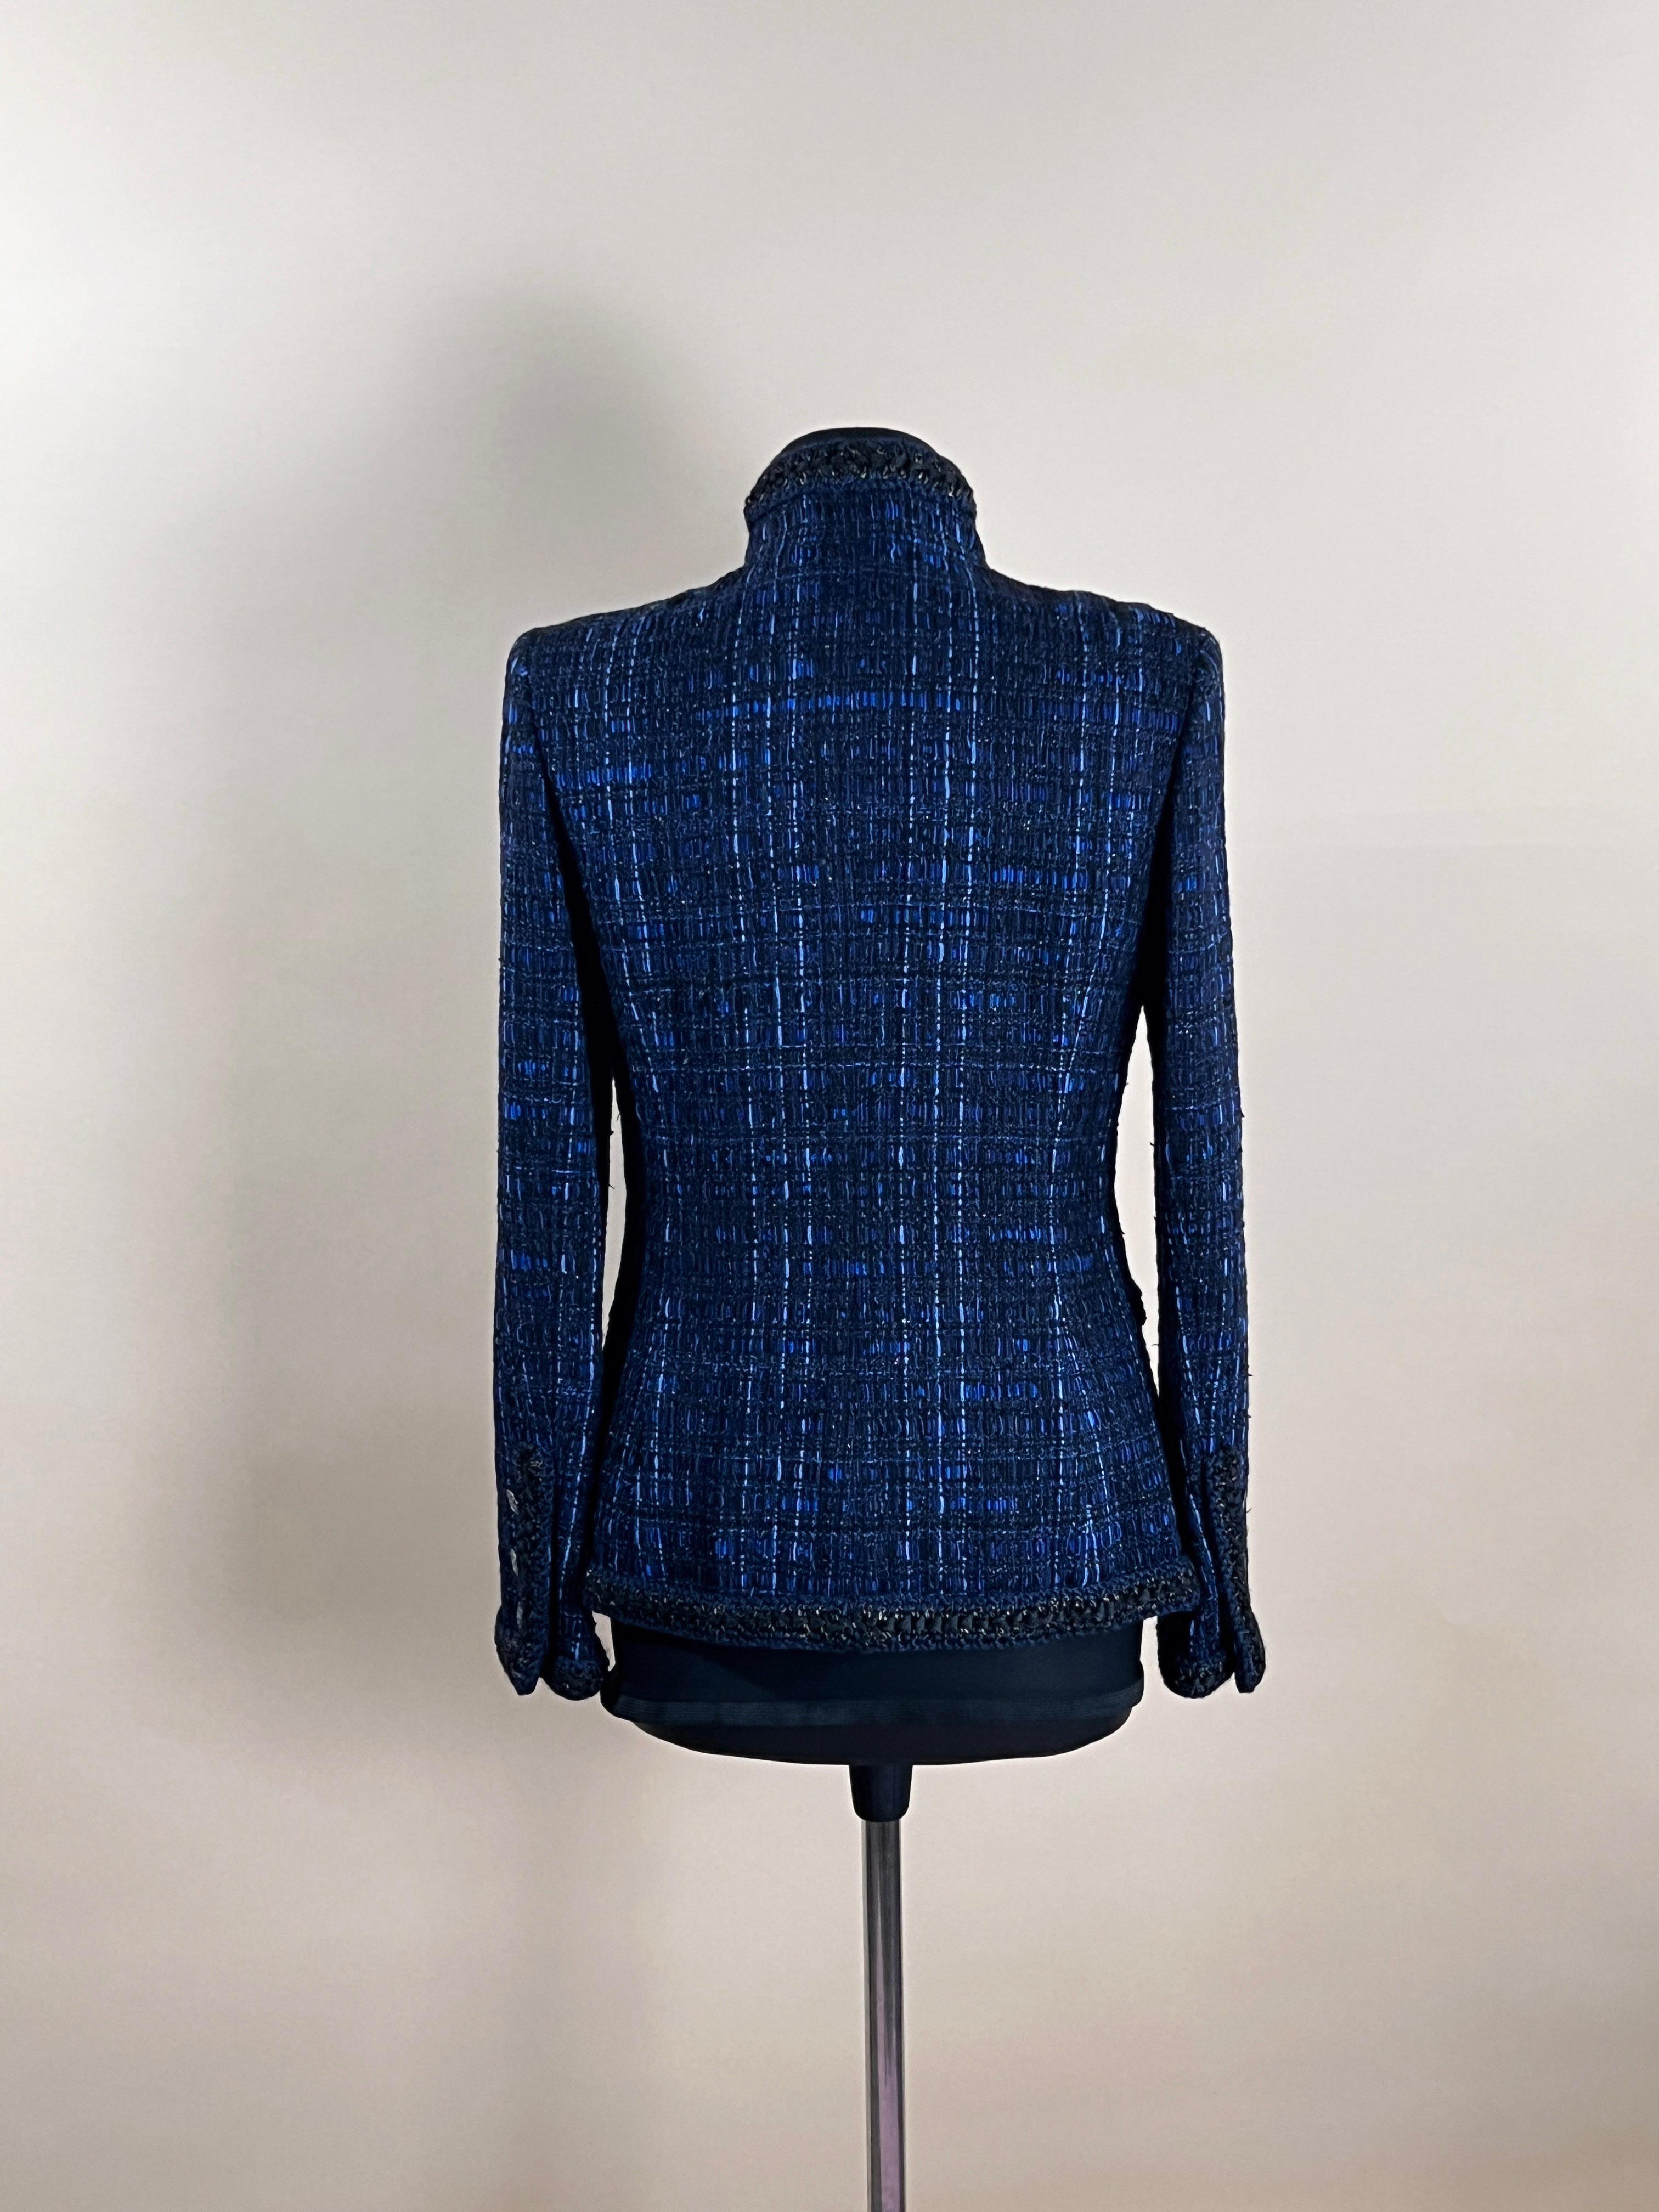 Chanel Shanghai Collection Ribbon Tweed Jacket, 2010 6